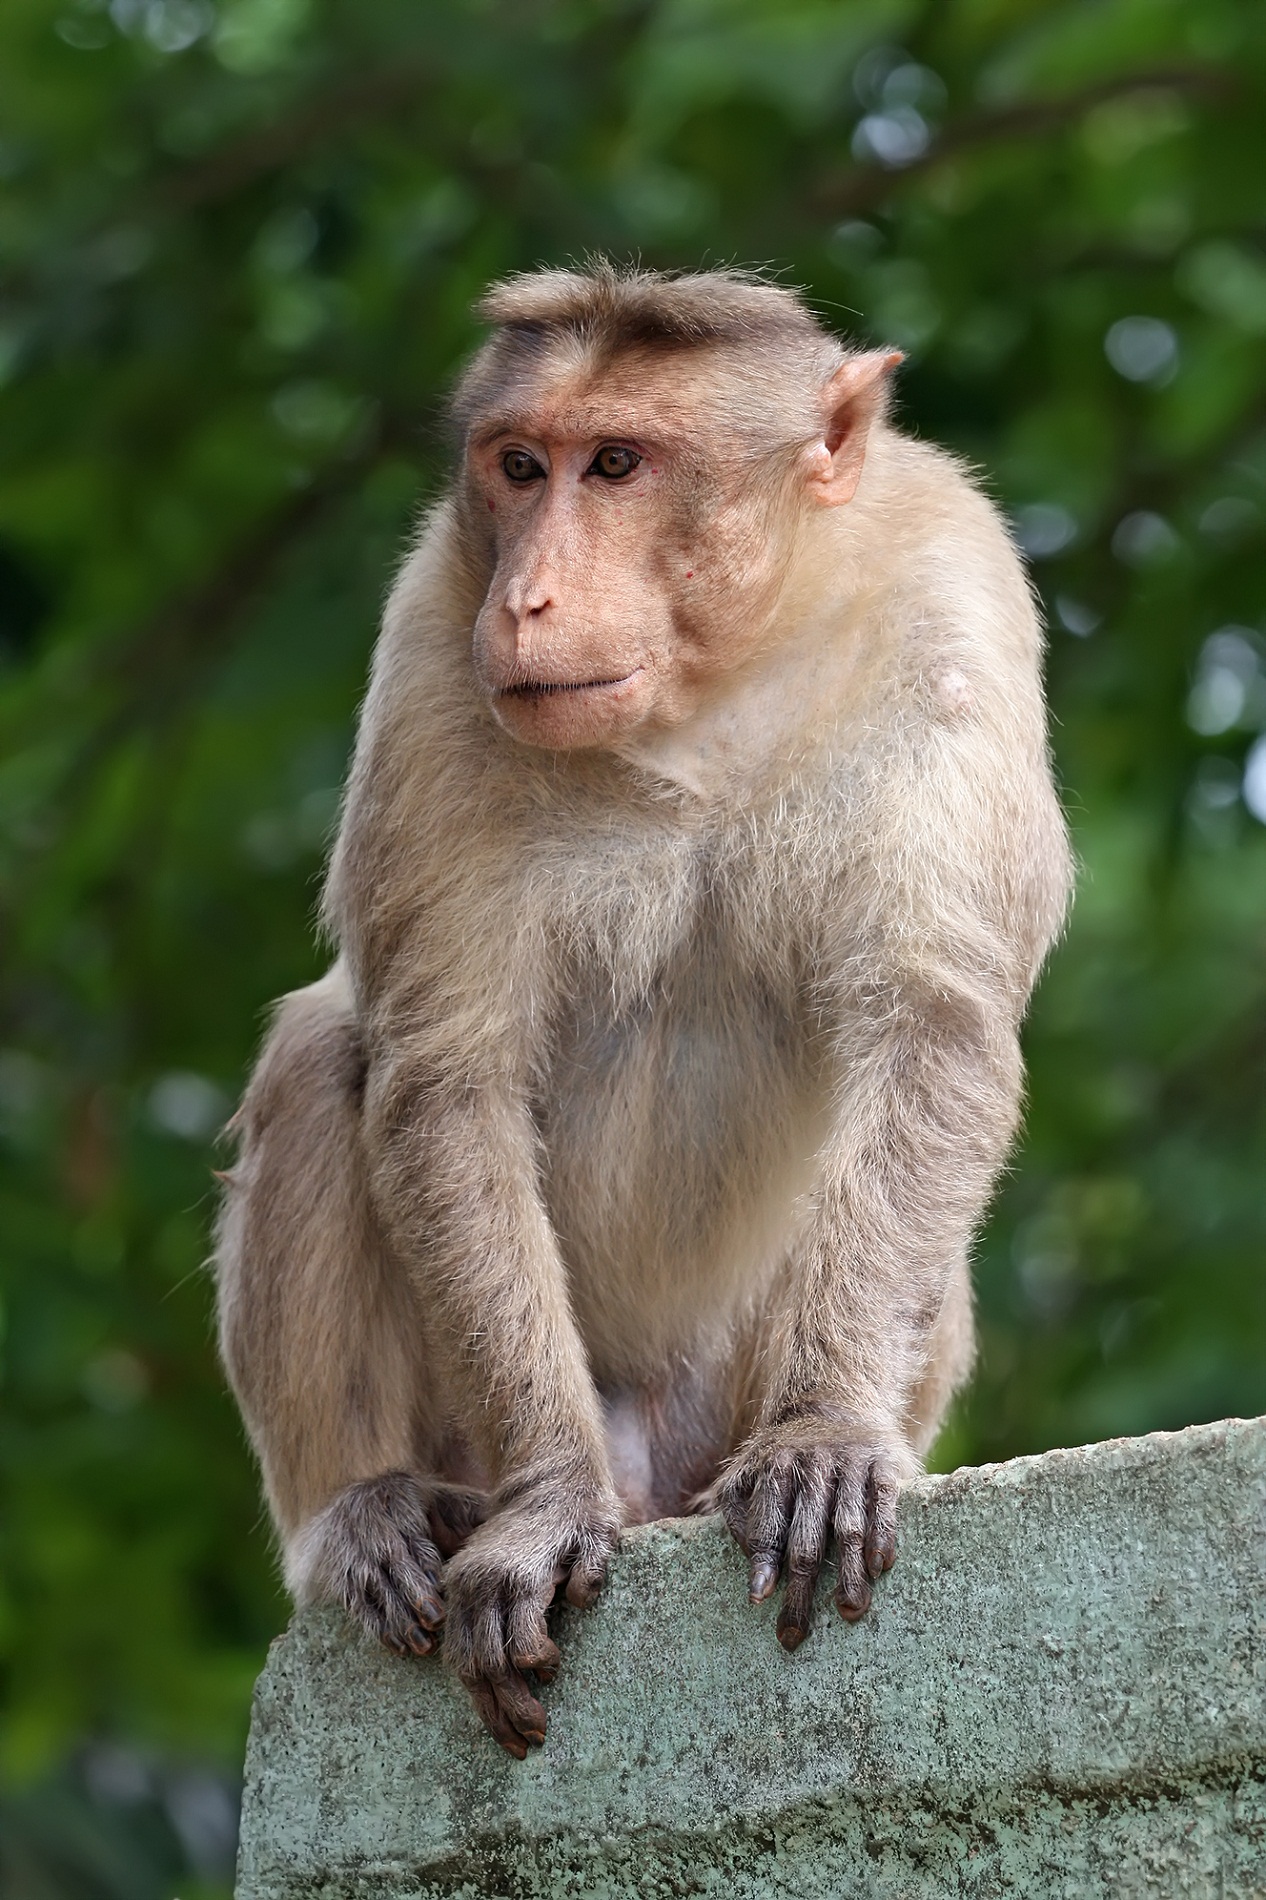 images of monkeys new